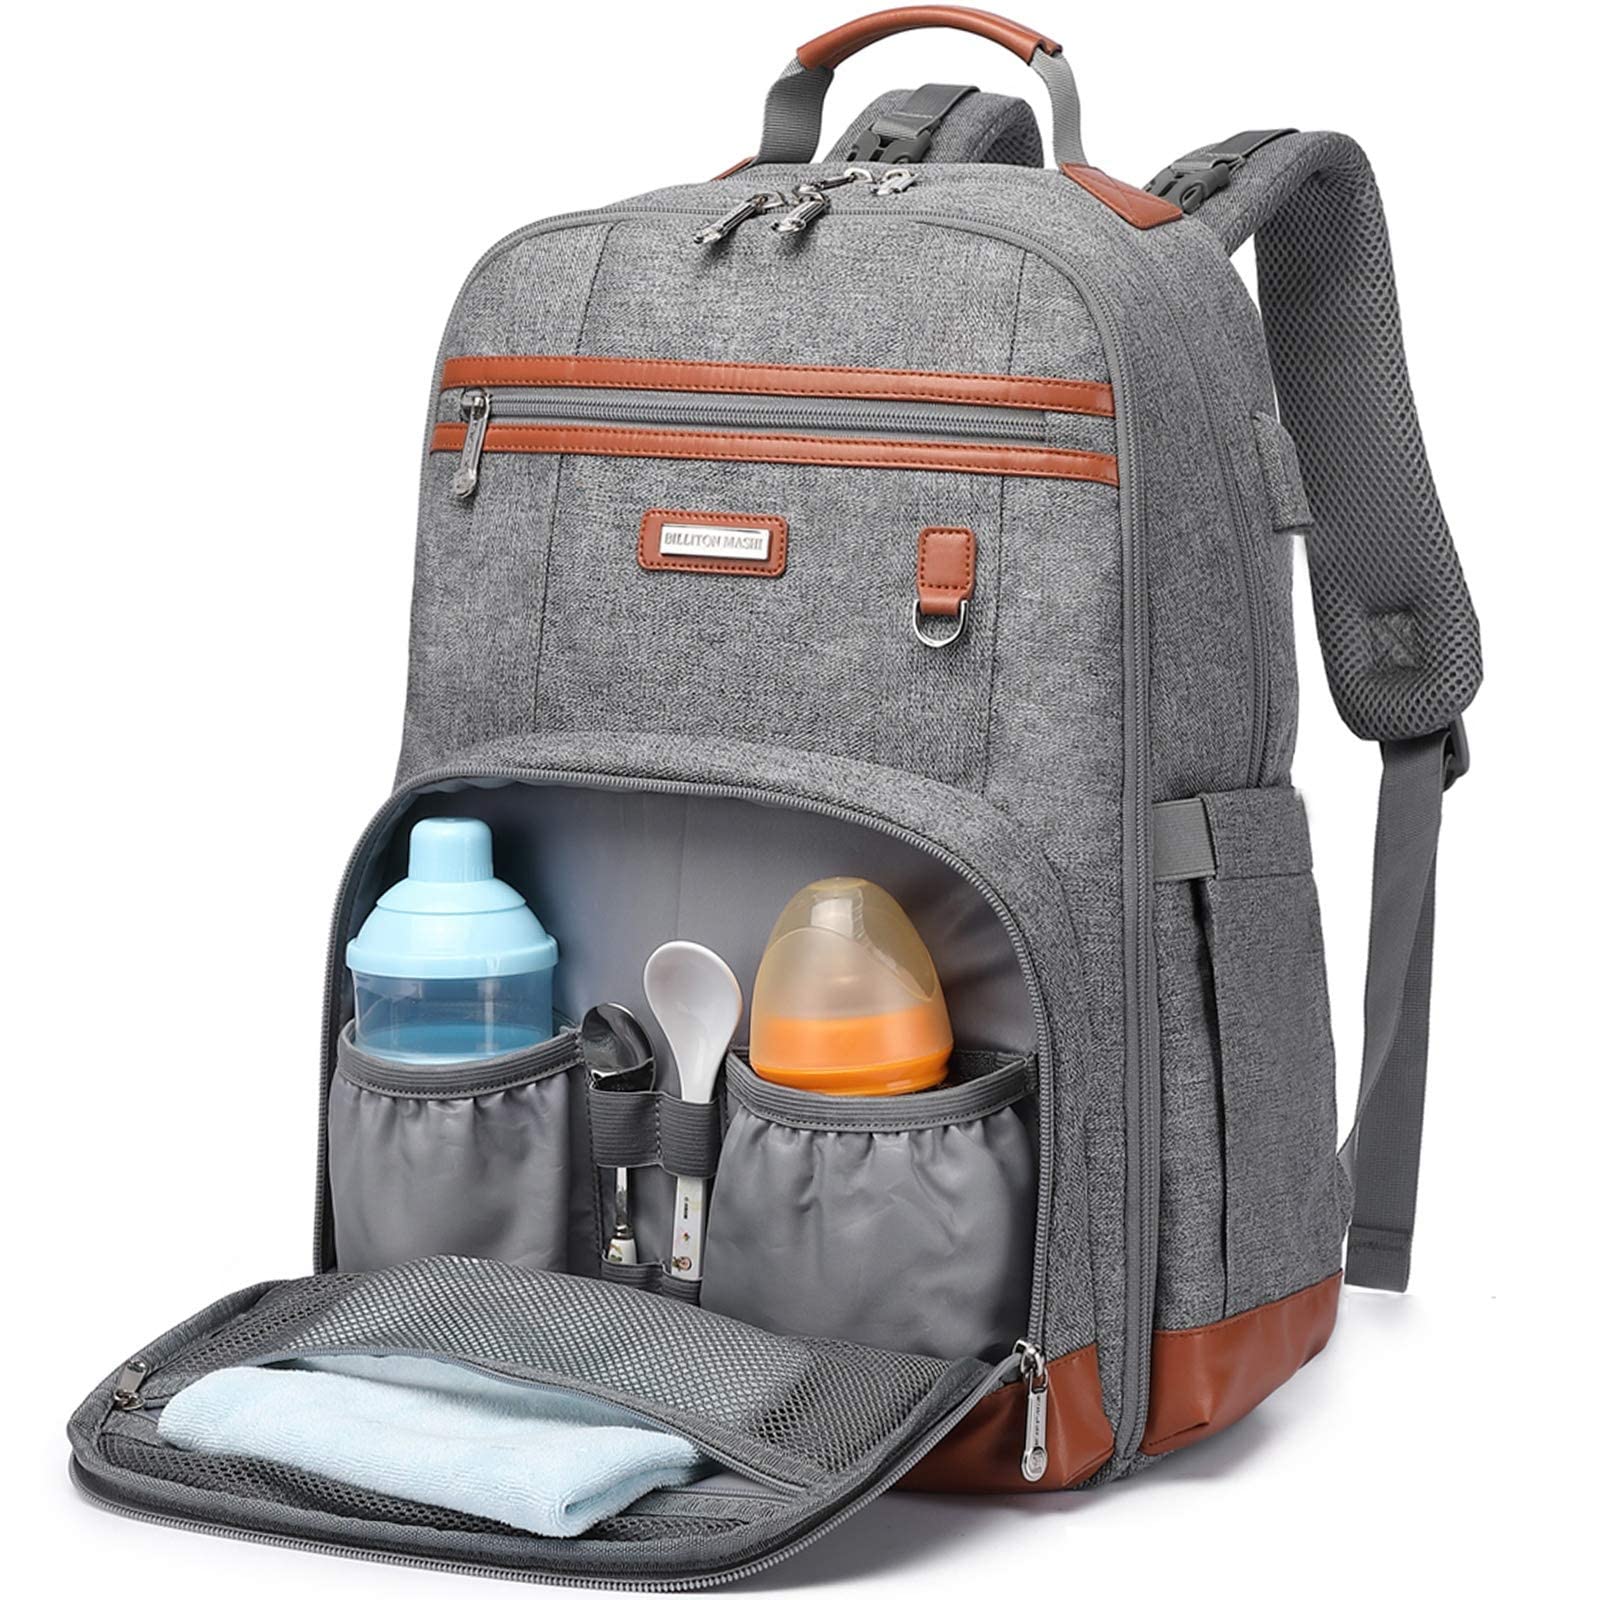 WATERPROOF BABY CHANGING Bag Backpack High Capacity Nappy Bags